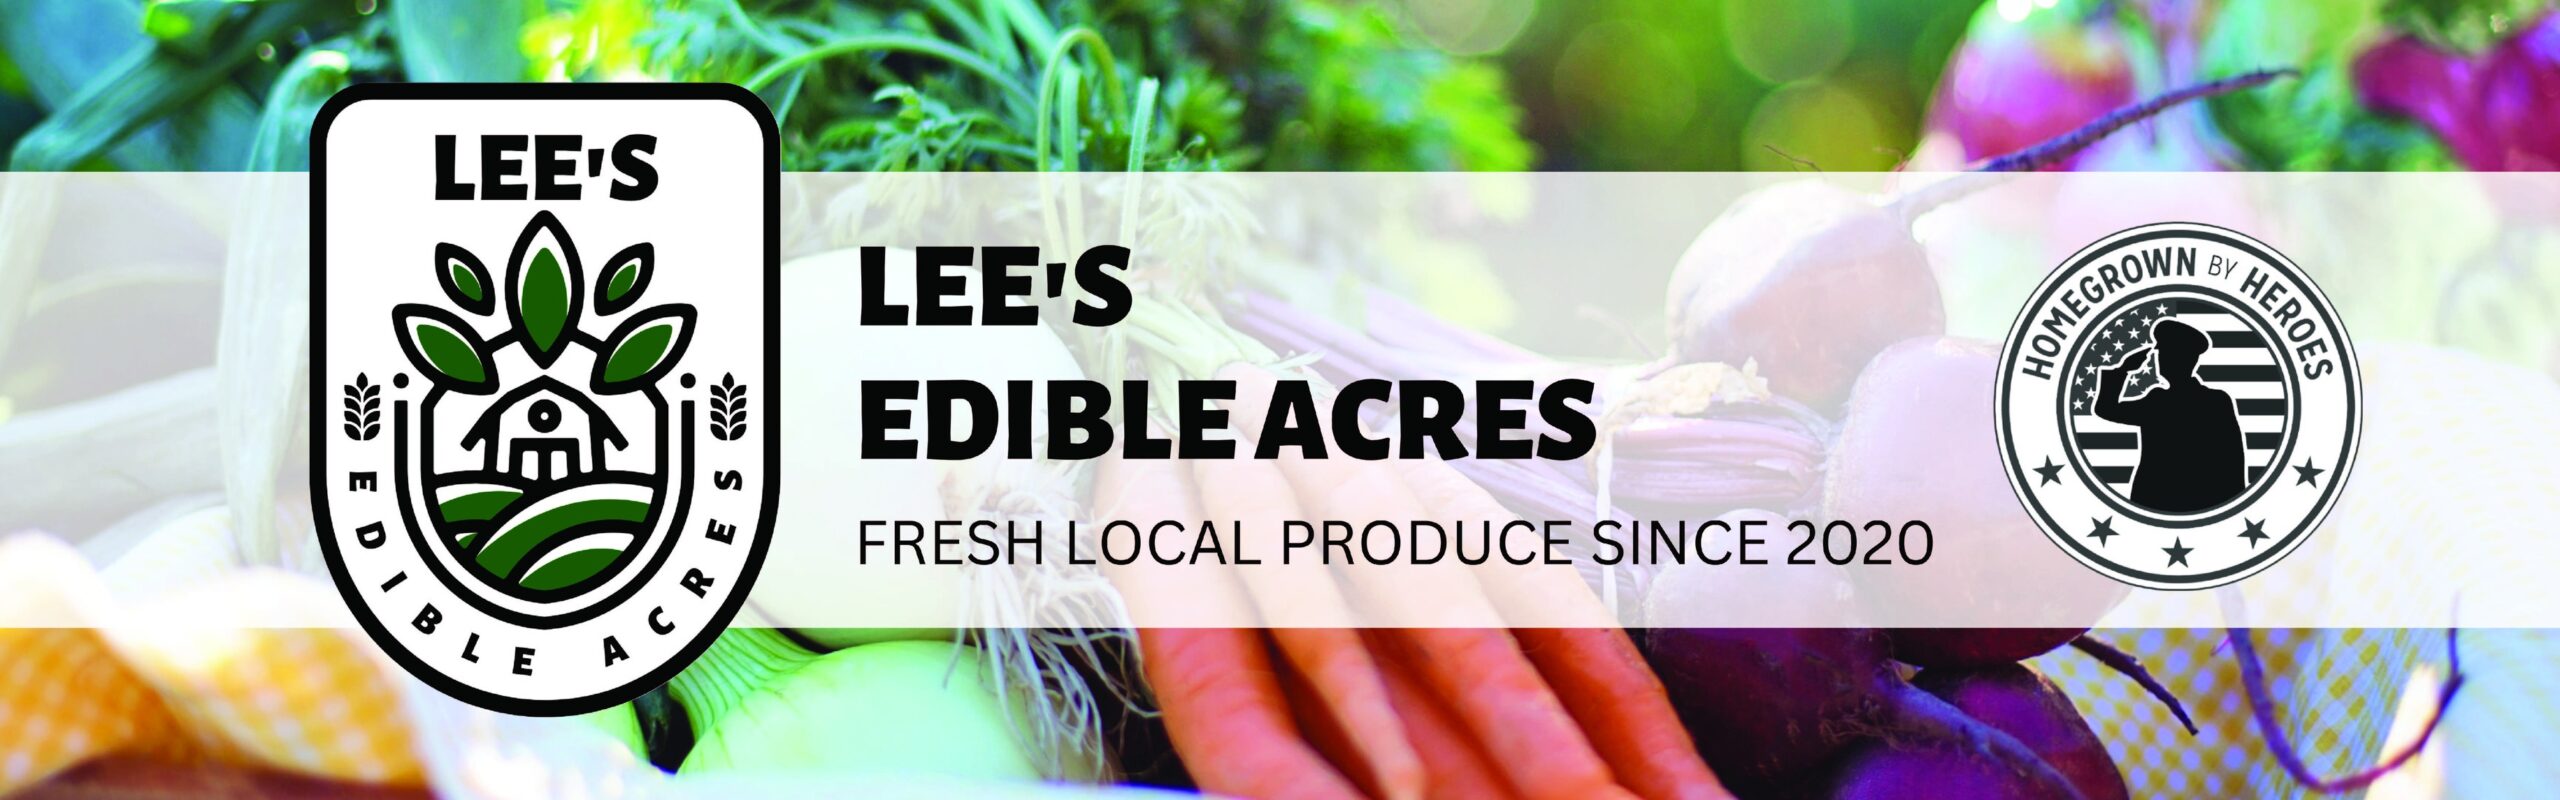 Lee's Edible Acres